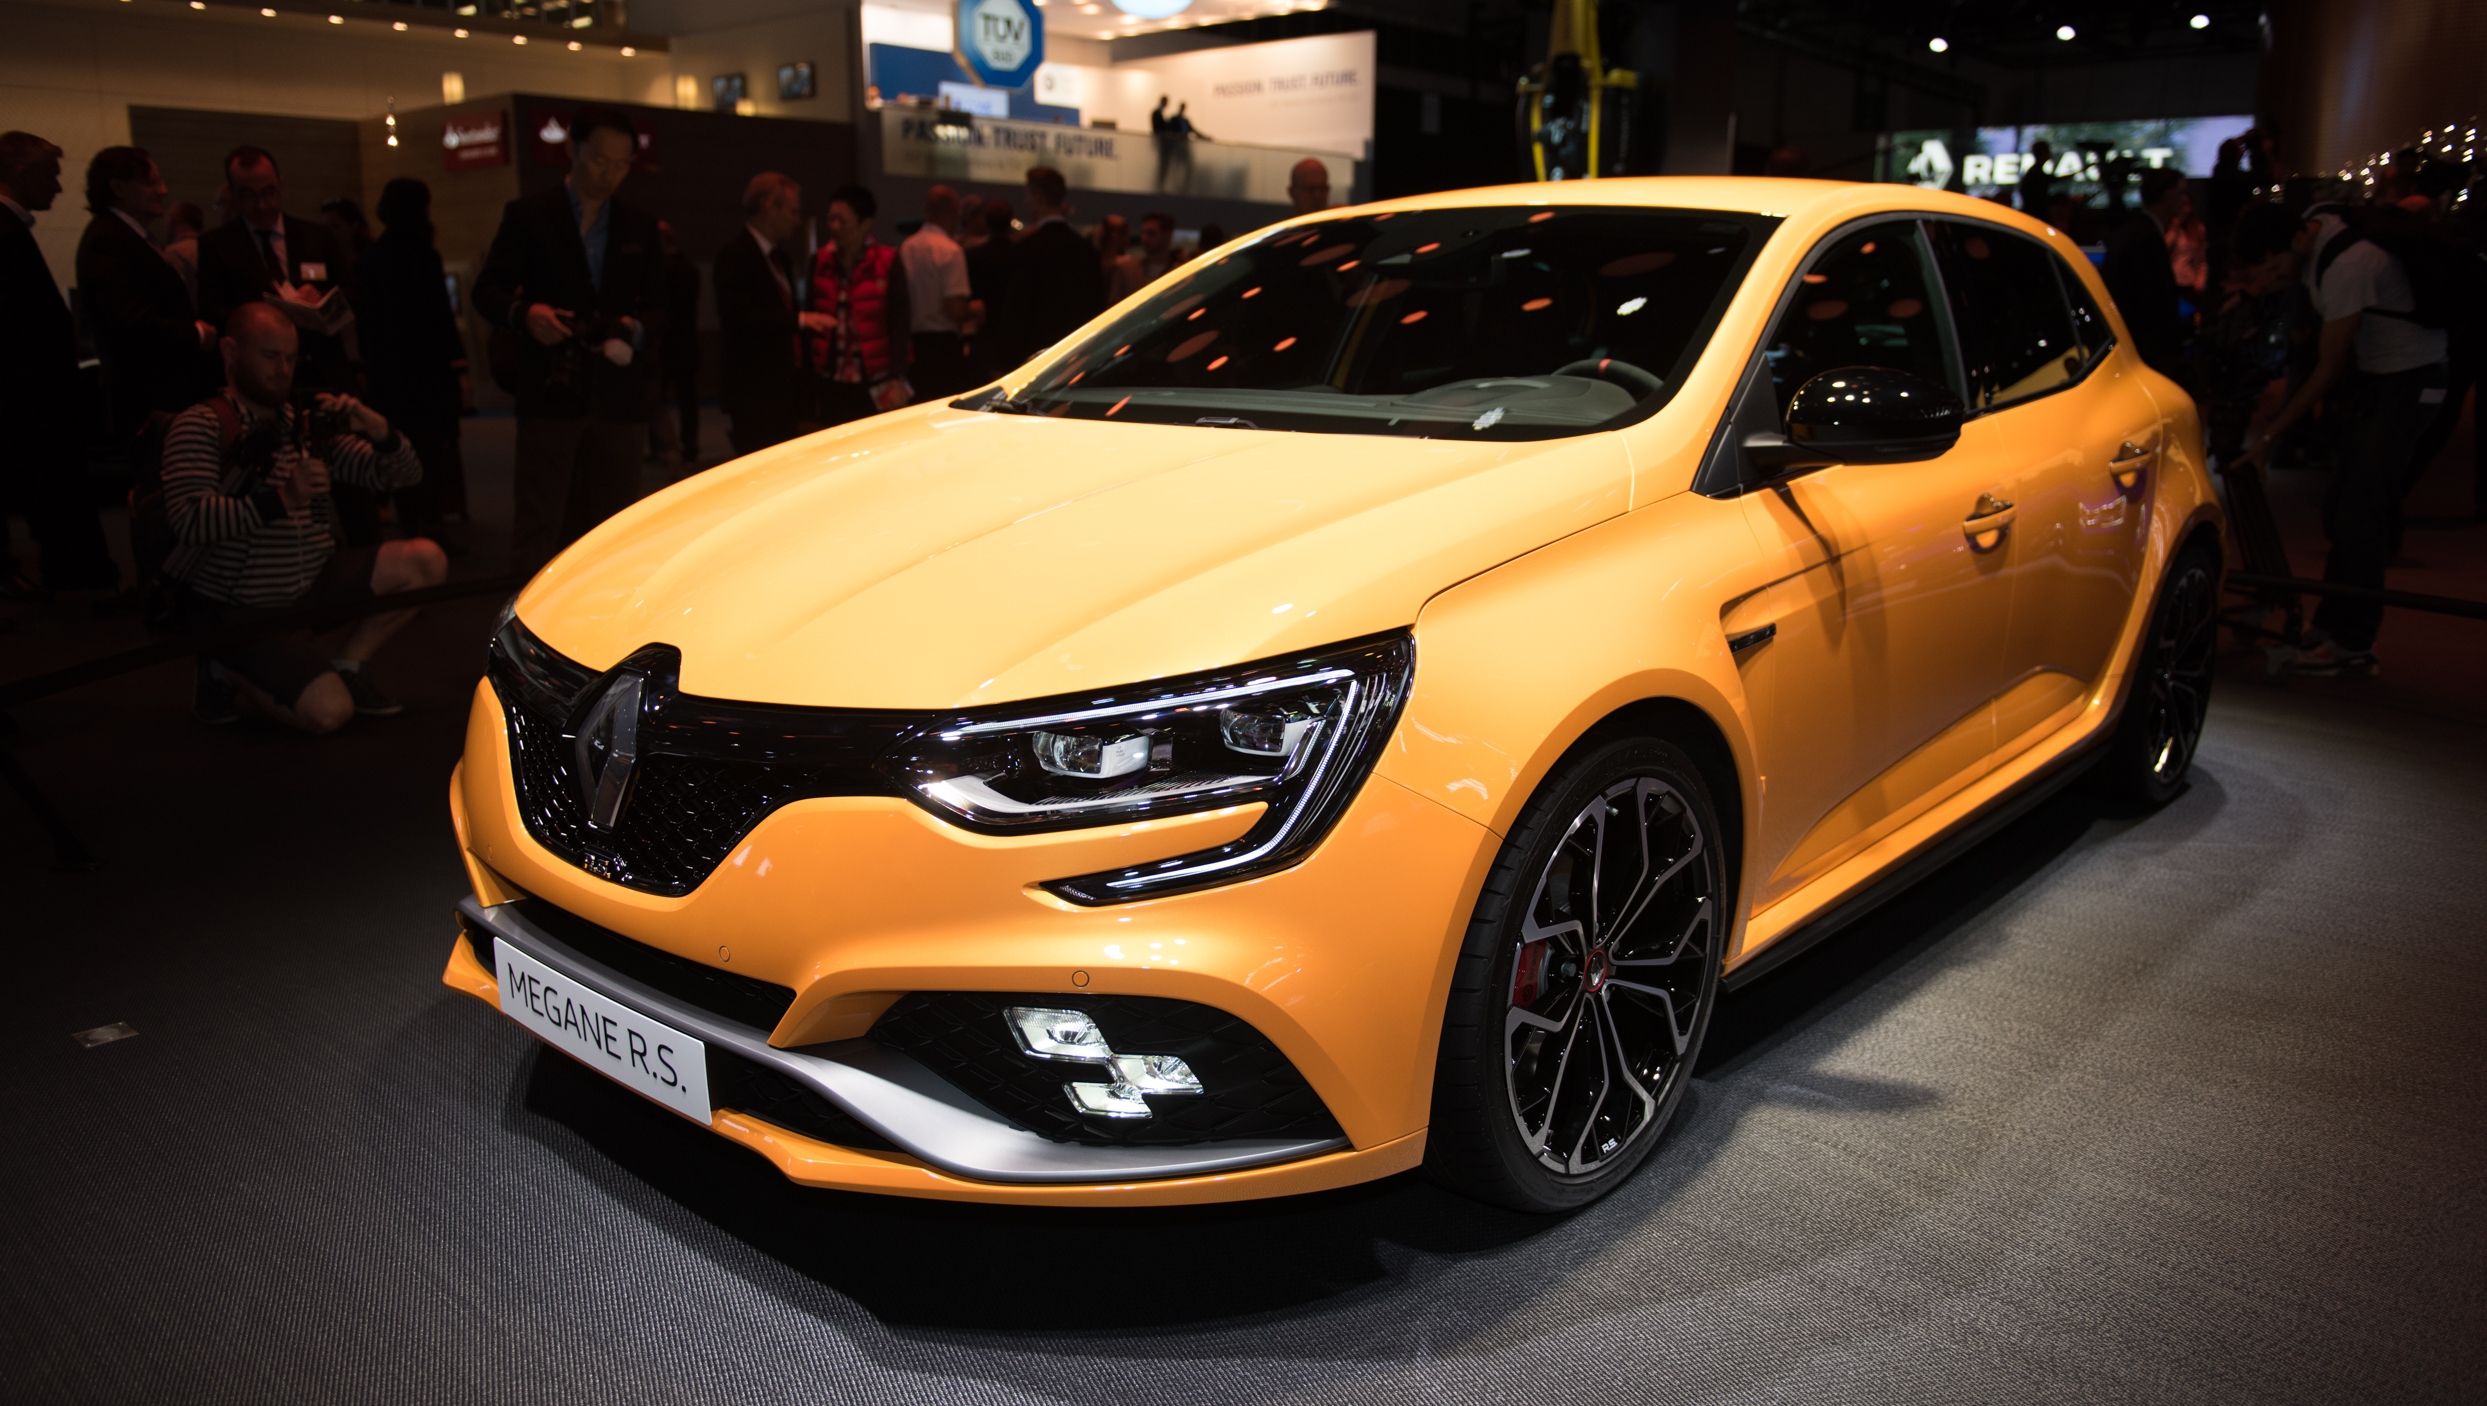 2018 Renault Megane R.S.